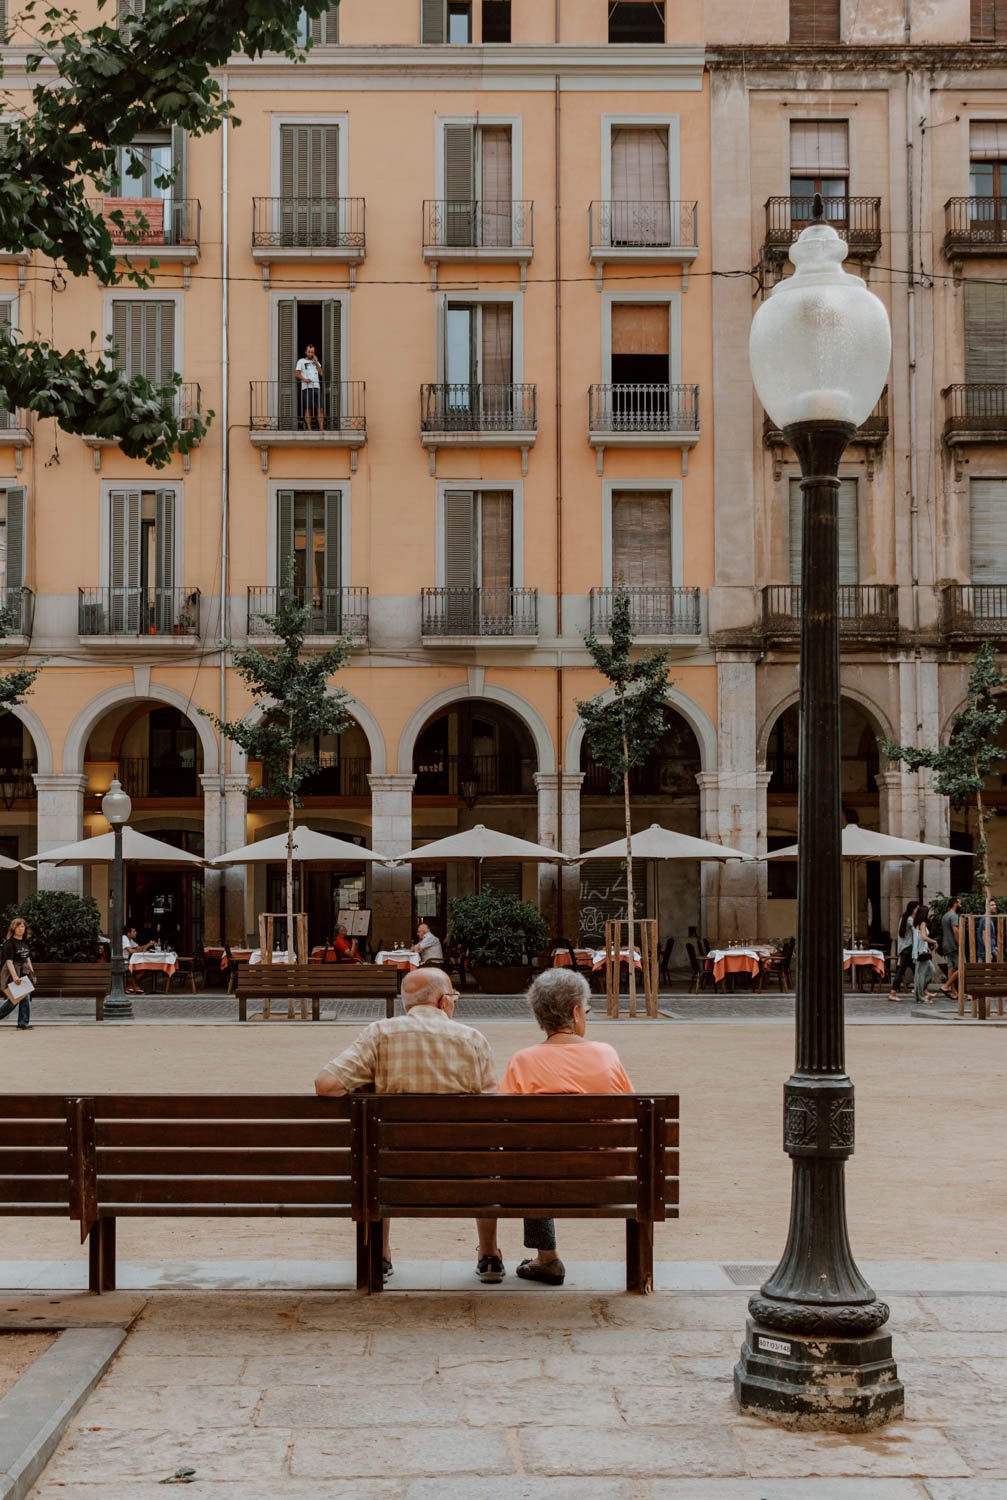 Things to do in Girona - Plaza de la Independencia - Girona, Spain